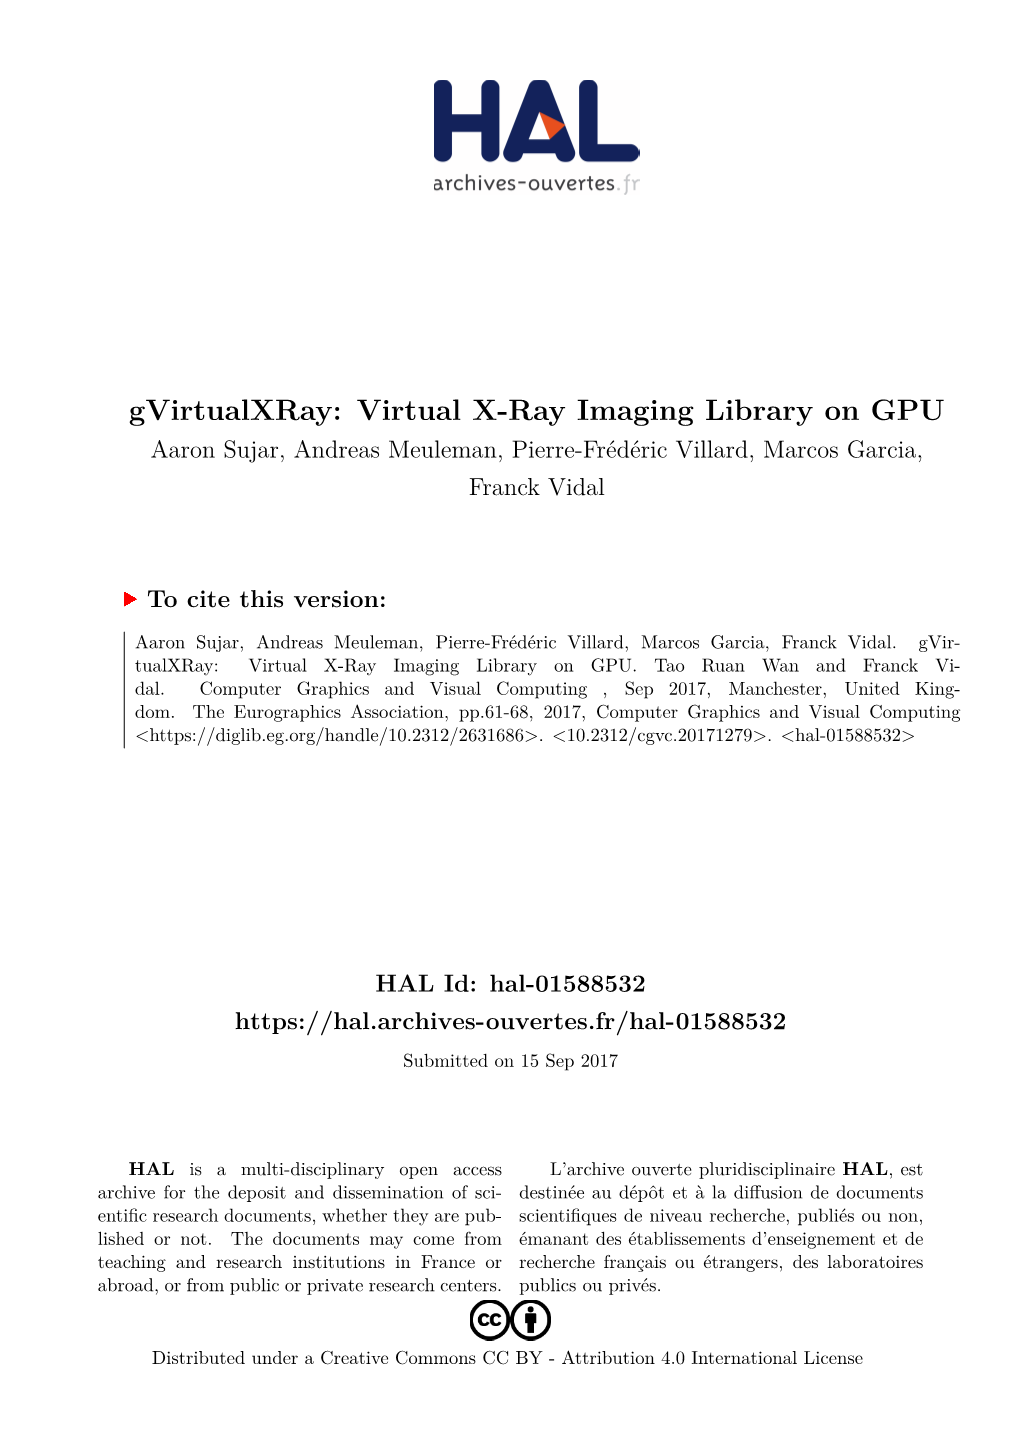 Gvirtualxray: Virtual X-Ray Imaging Library on GPU Aaron Sujar, Andreas Meuleman, Pierre-Frédéric Villard, Marcos Garcia, Franck Vidal